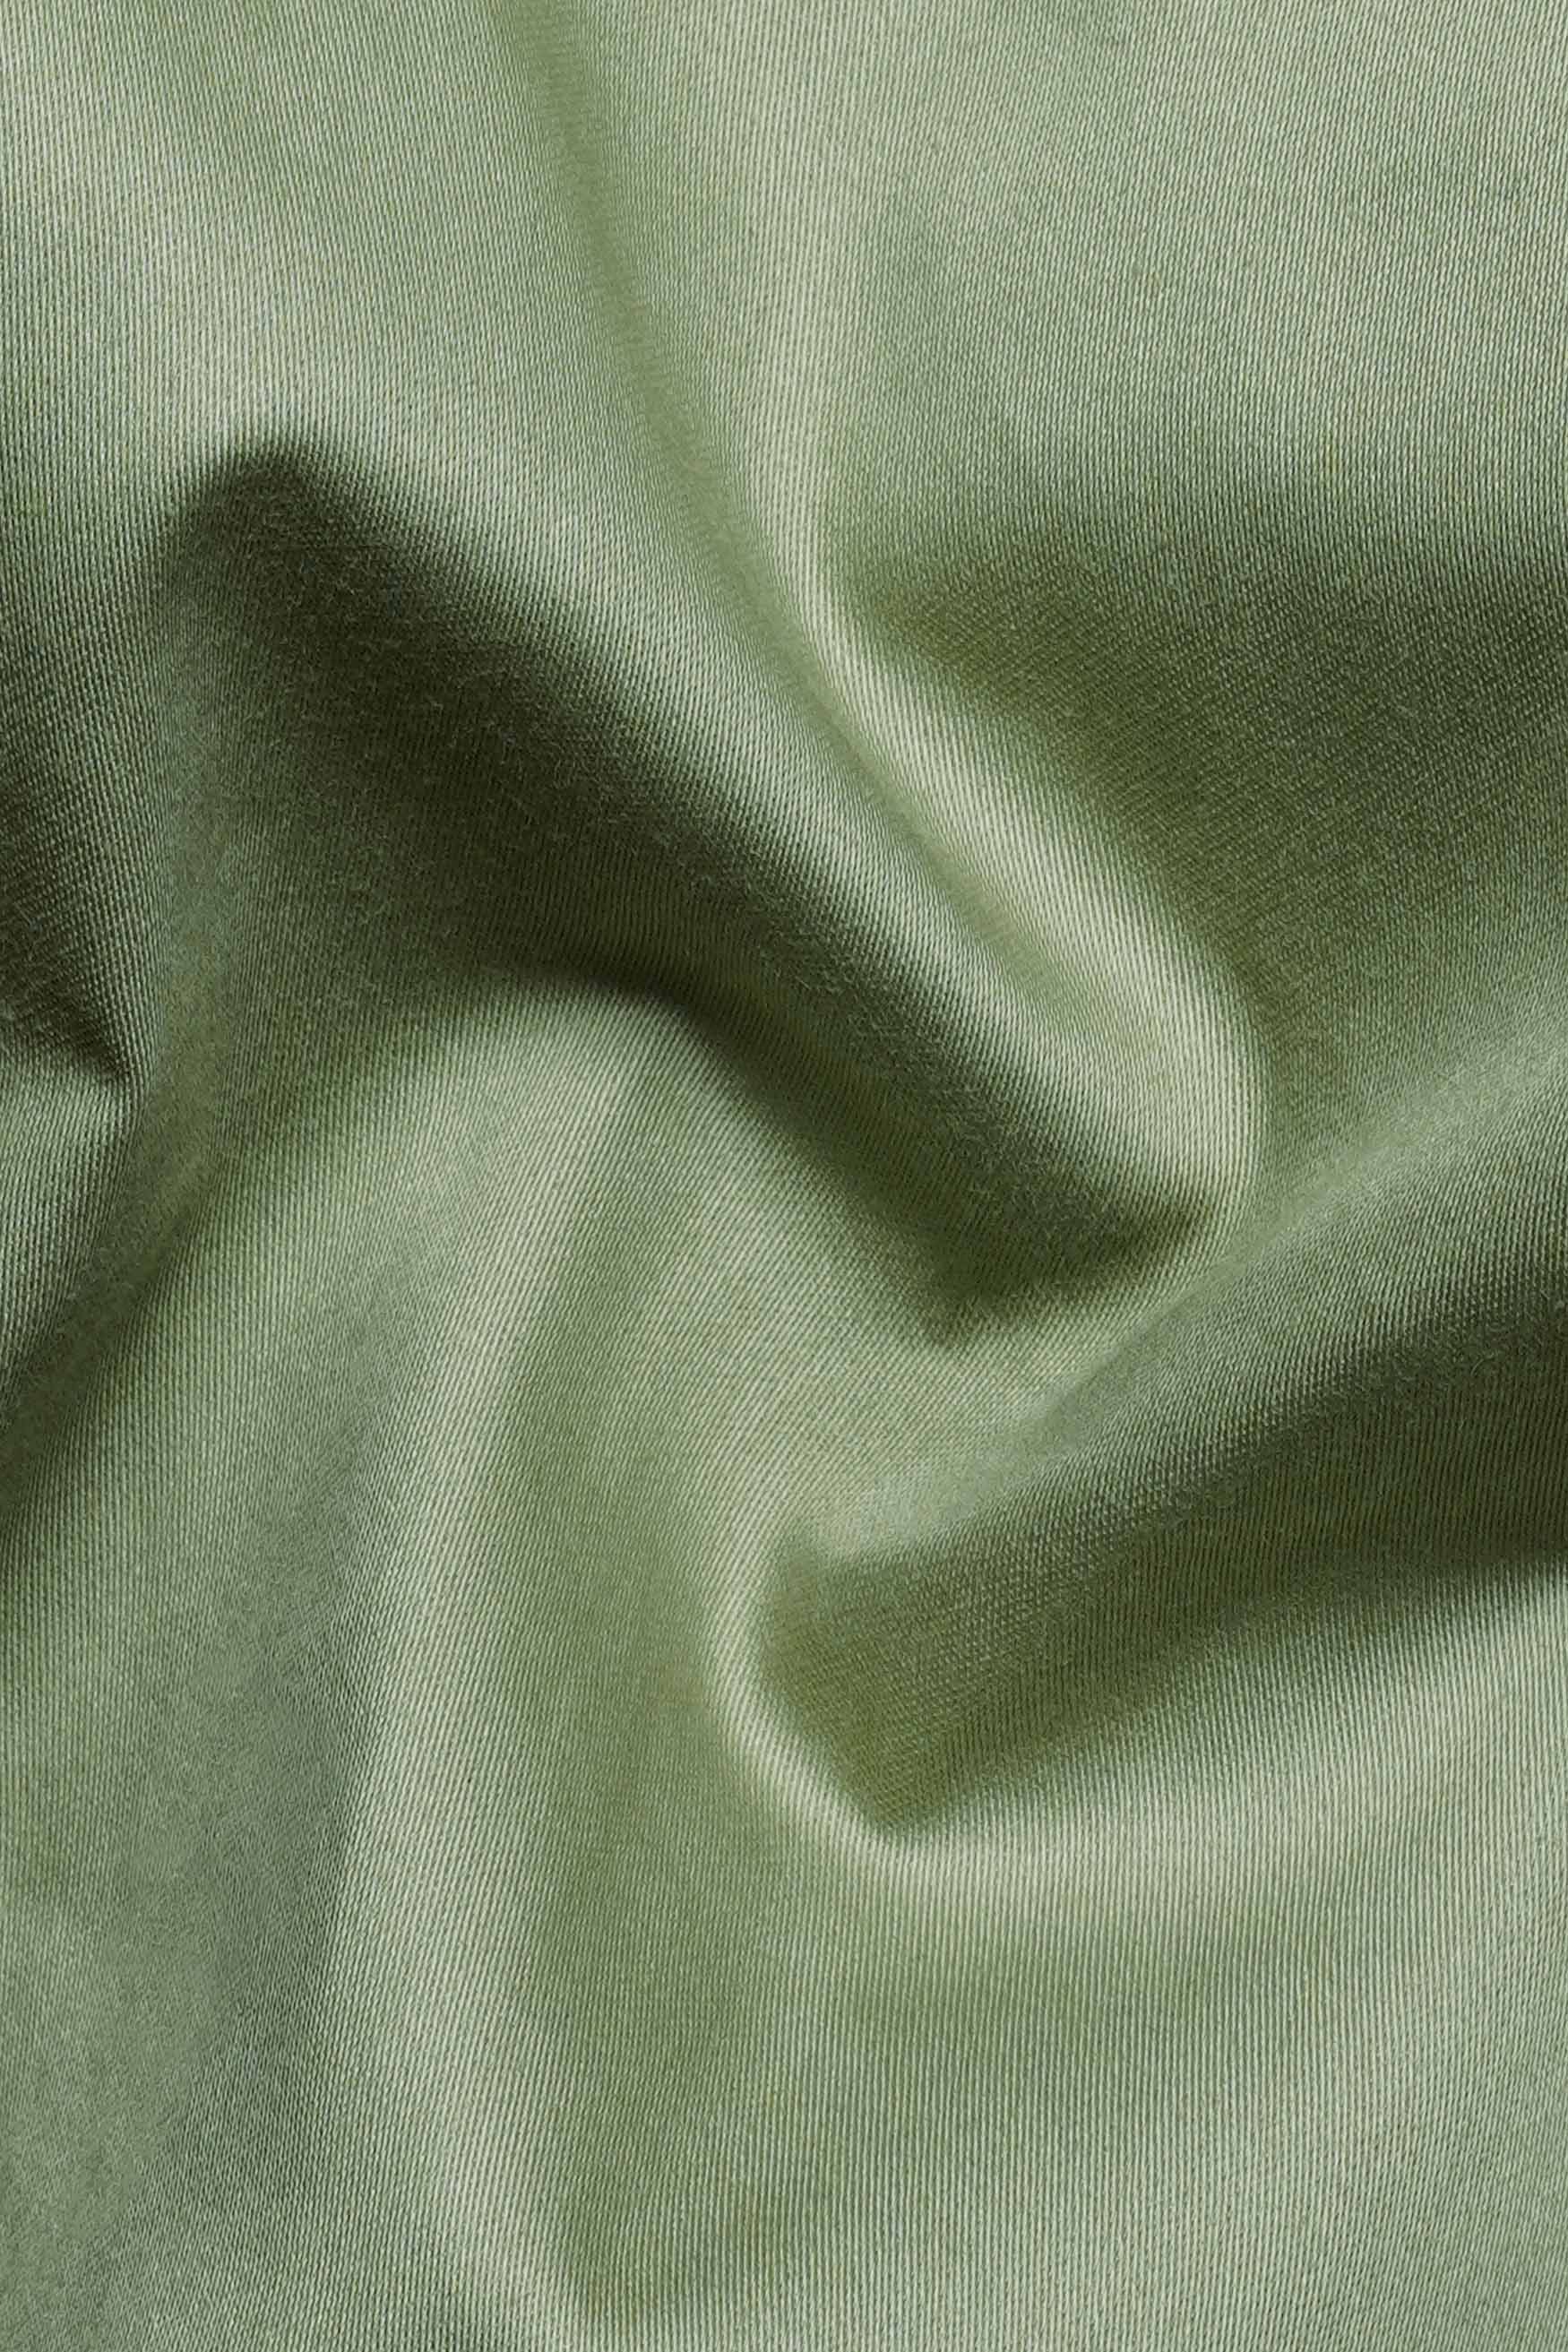 Pale Oyster Green Subtle Sheen Super Soft Premium Cotton Tuxedo Shirt